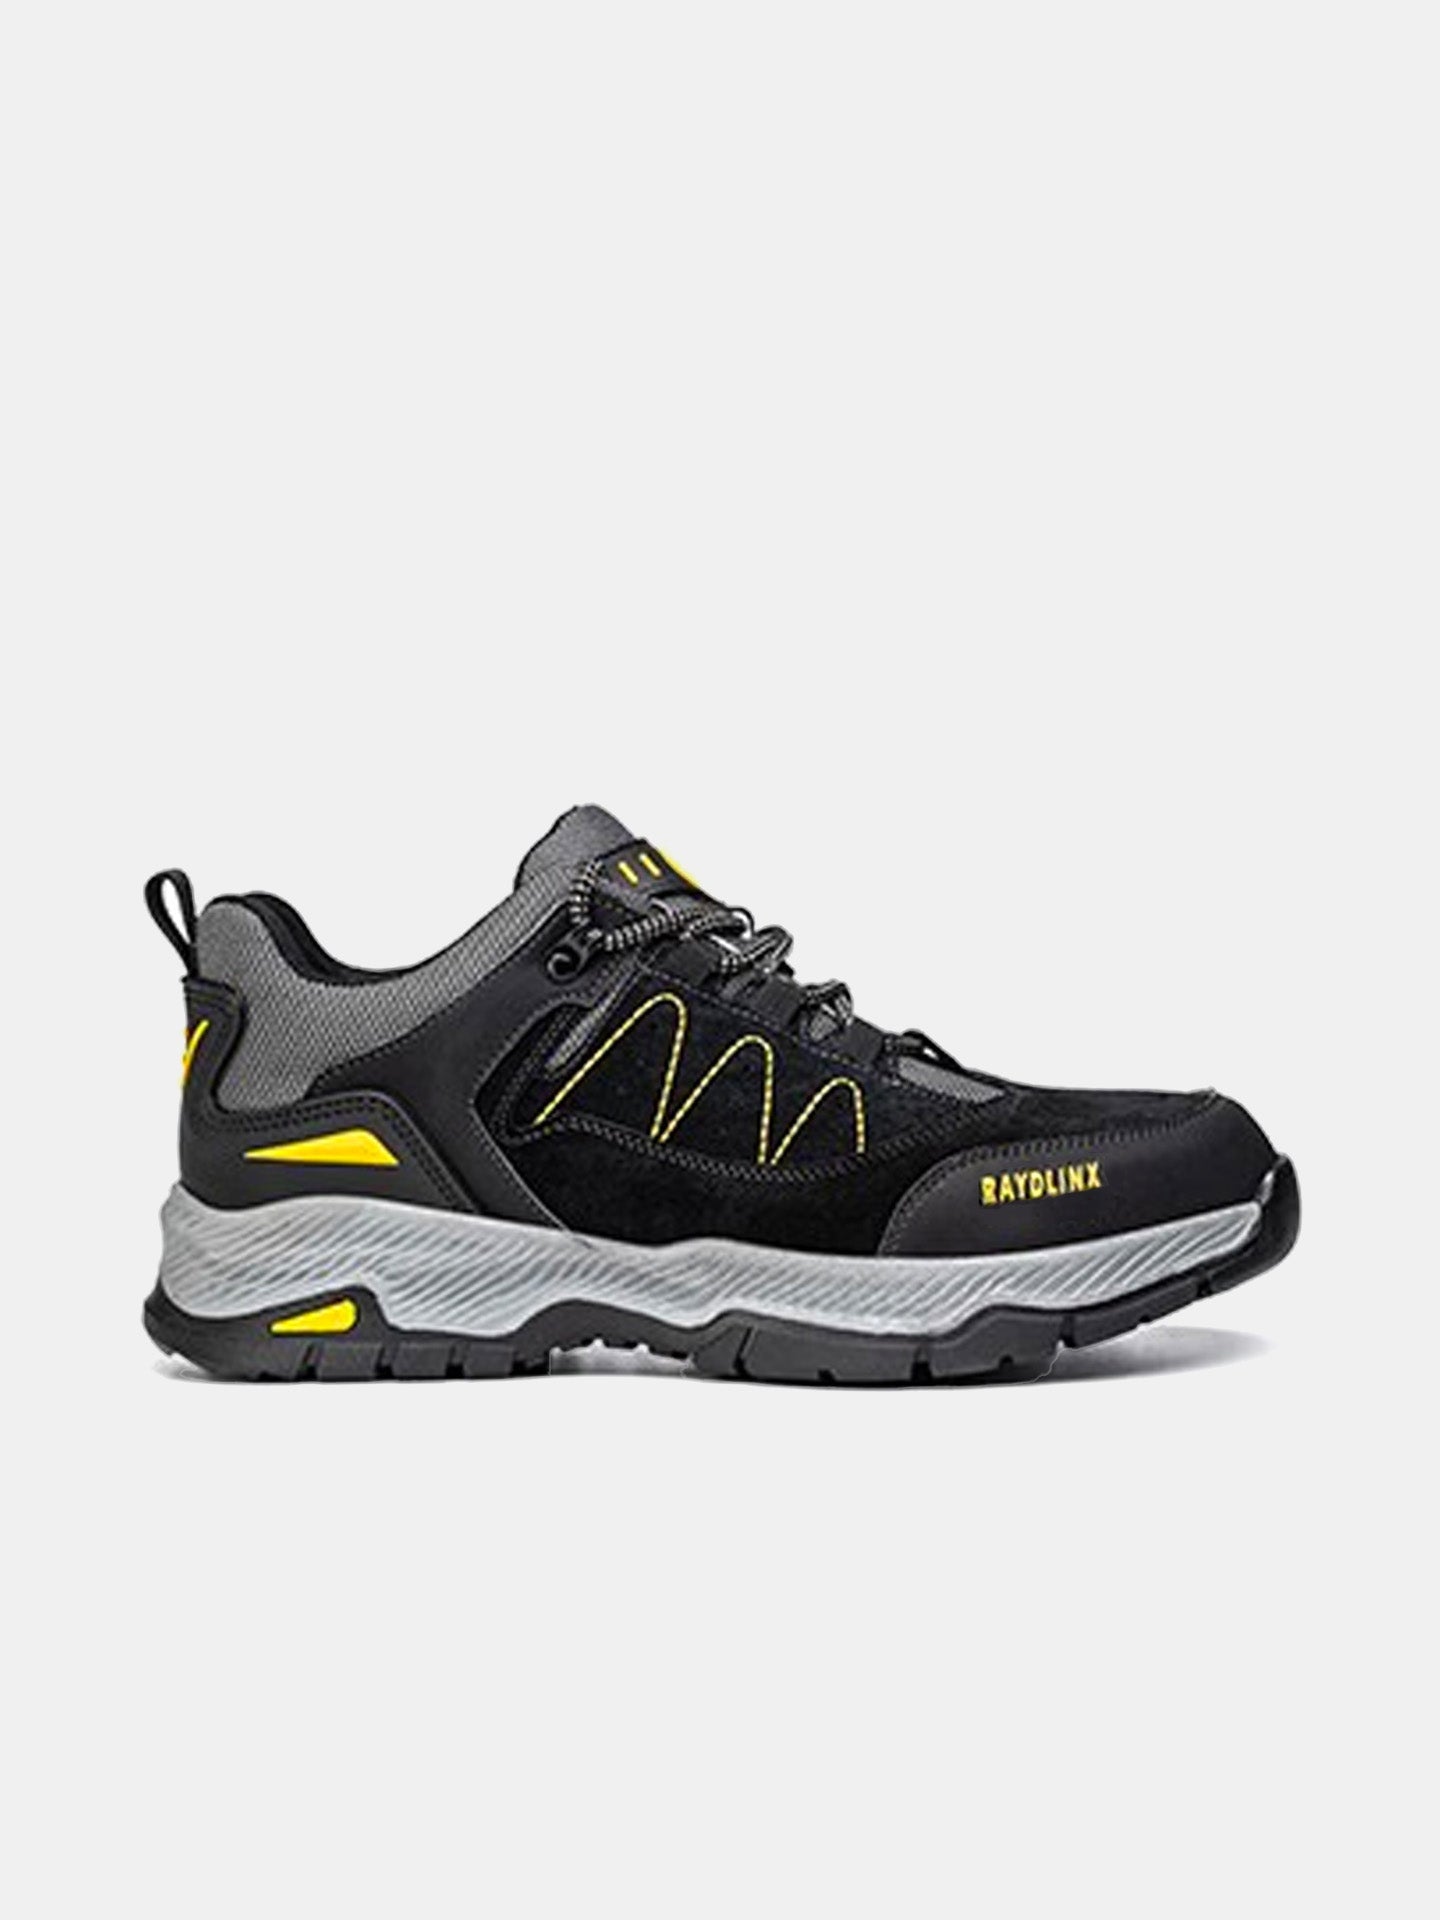 Raydlinx Men's Mountain Hiking Walking Shoes #color_Black